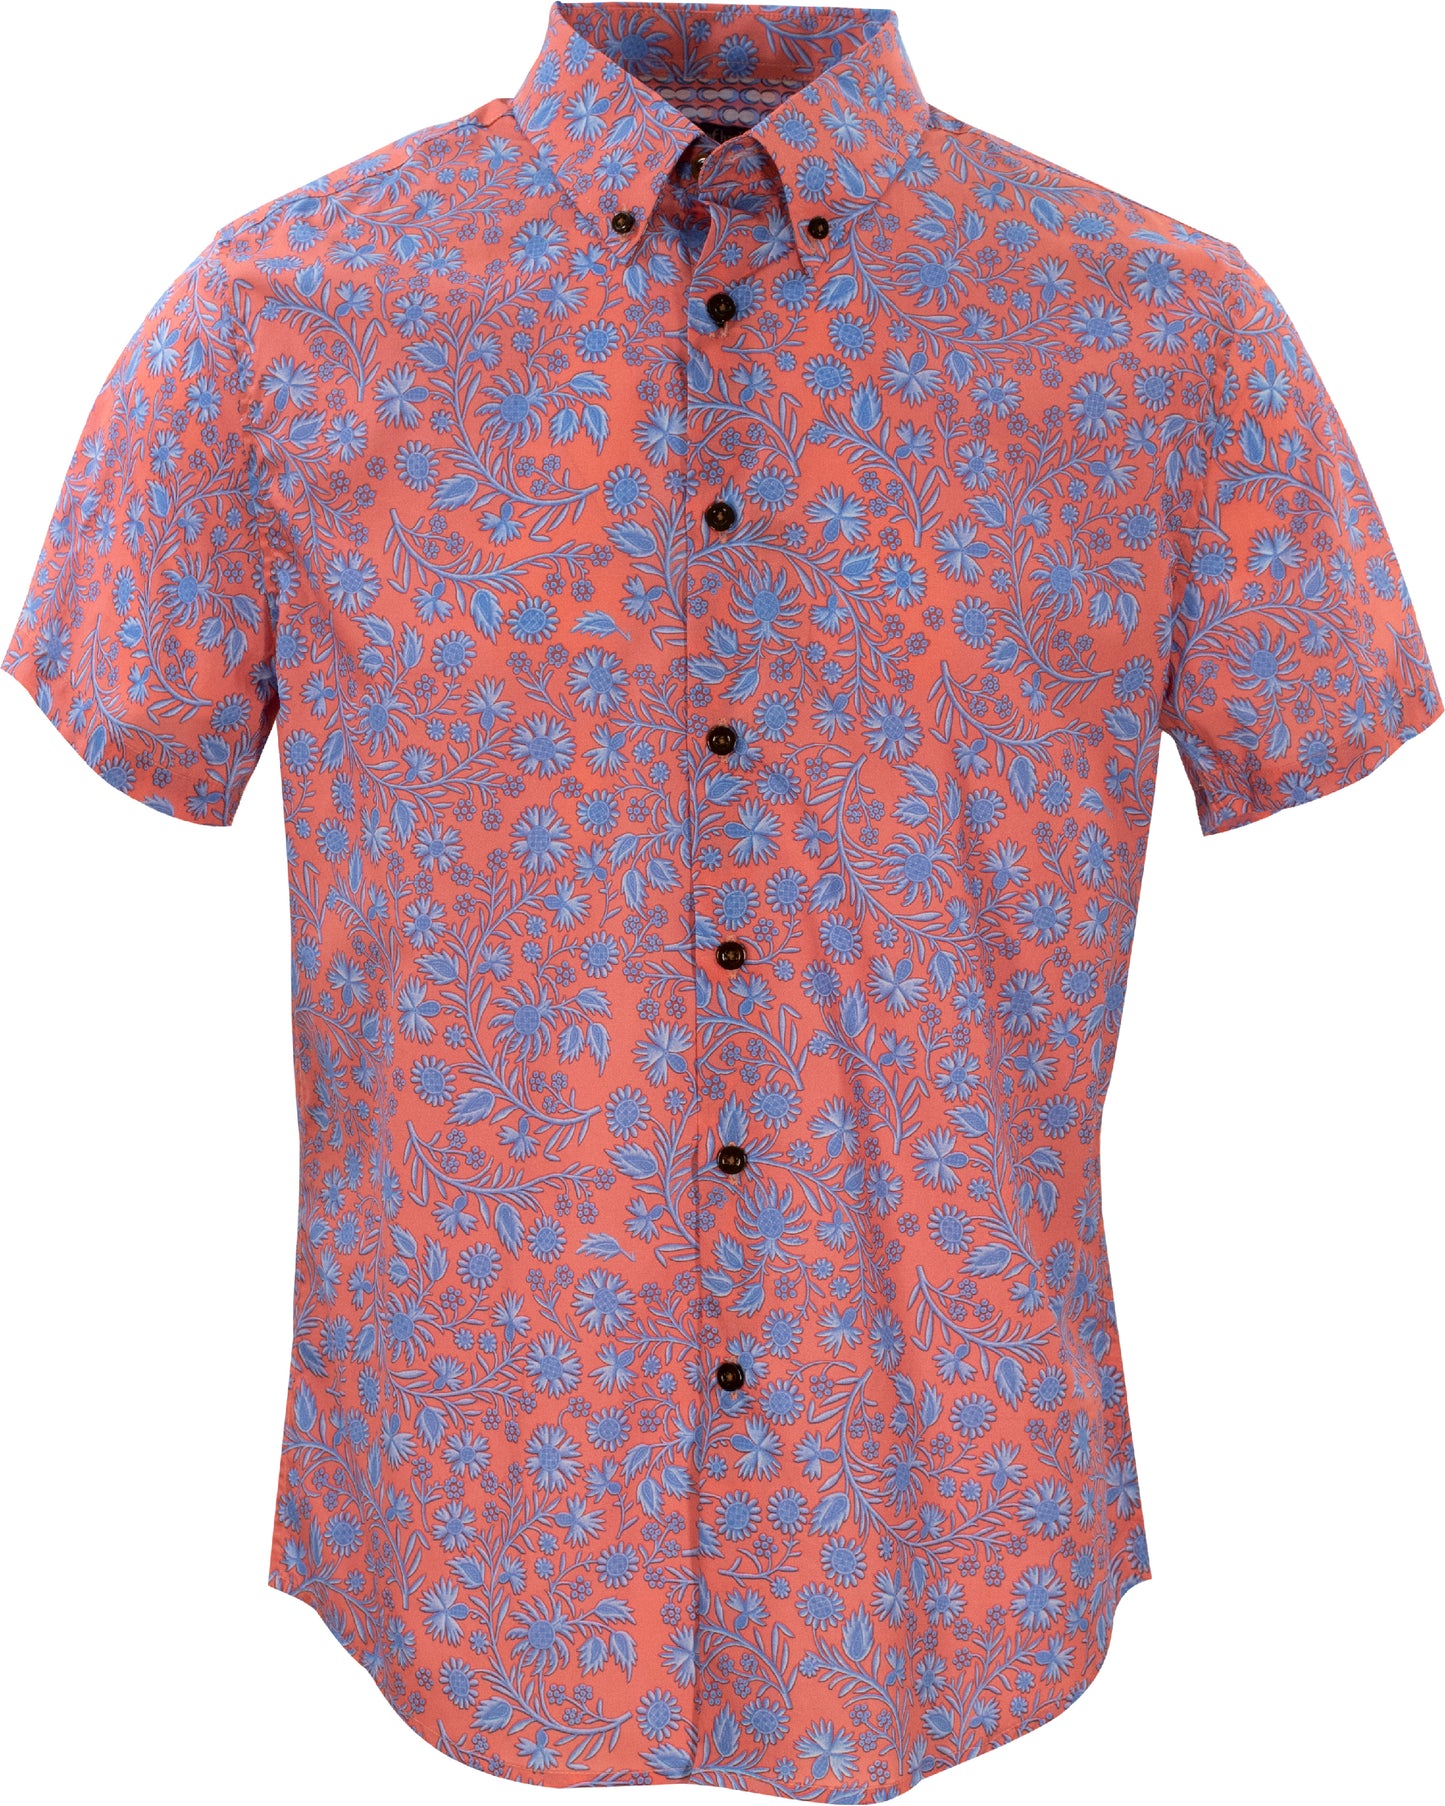 Tim Shadow Floral Coral Shirt